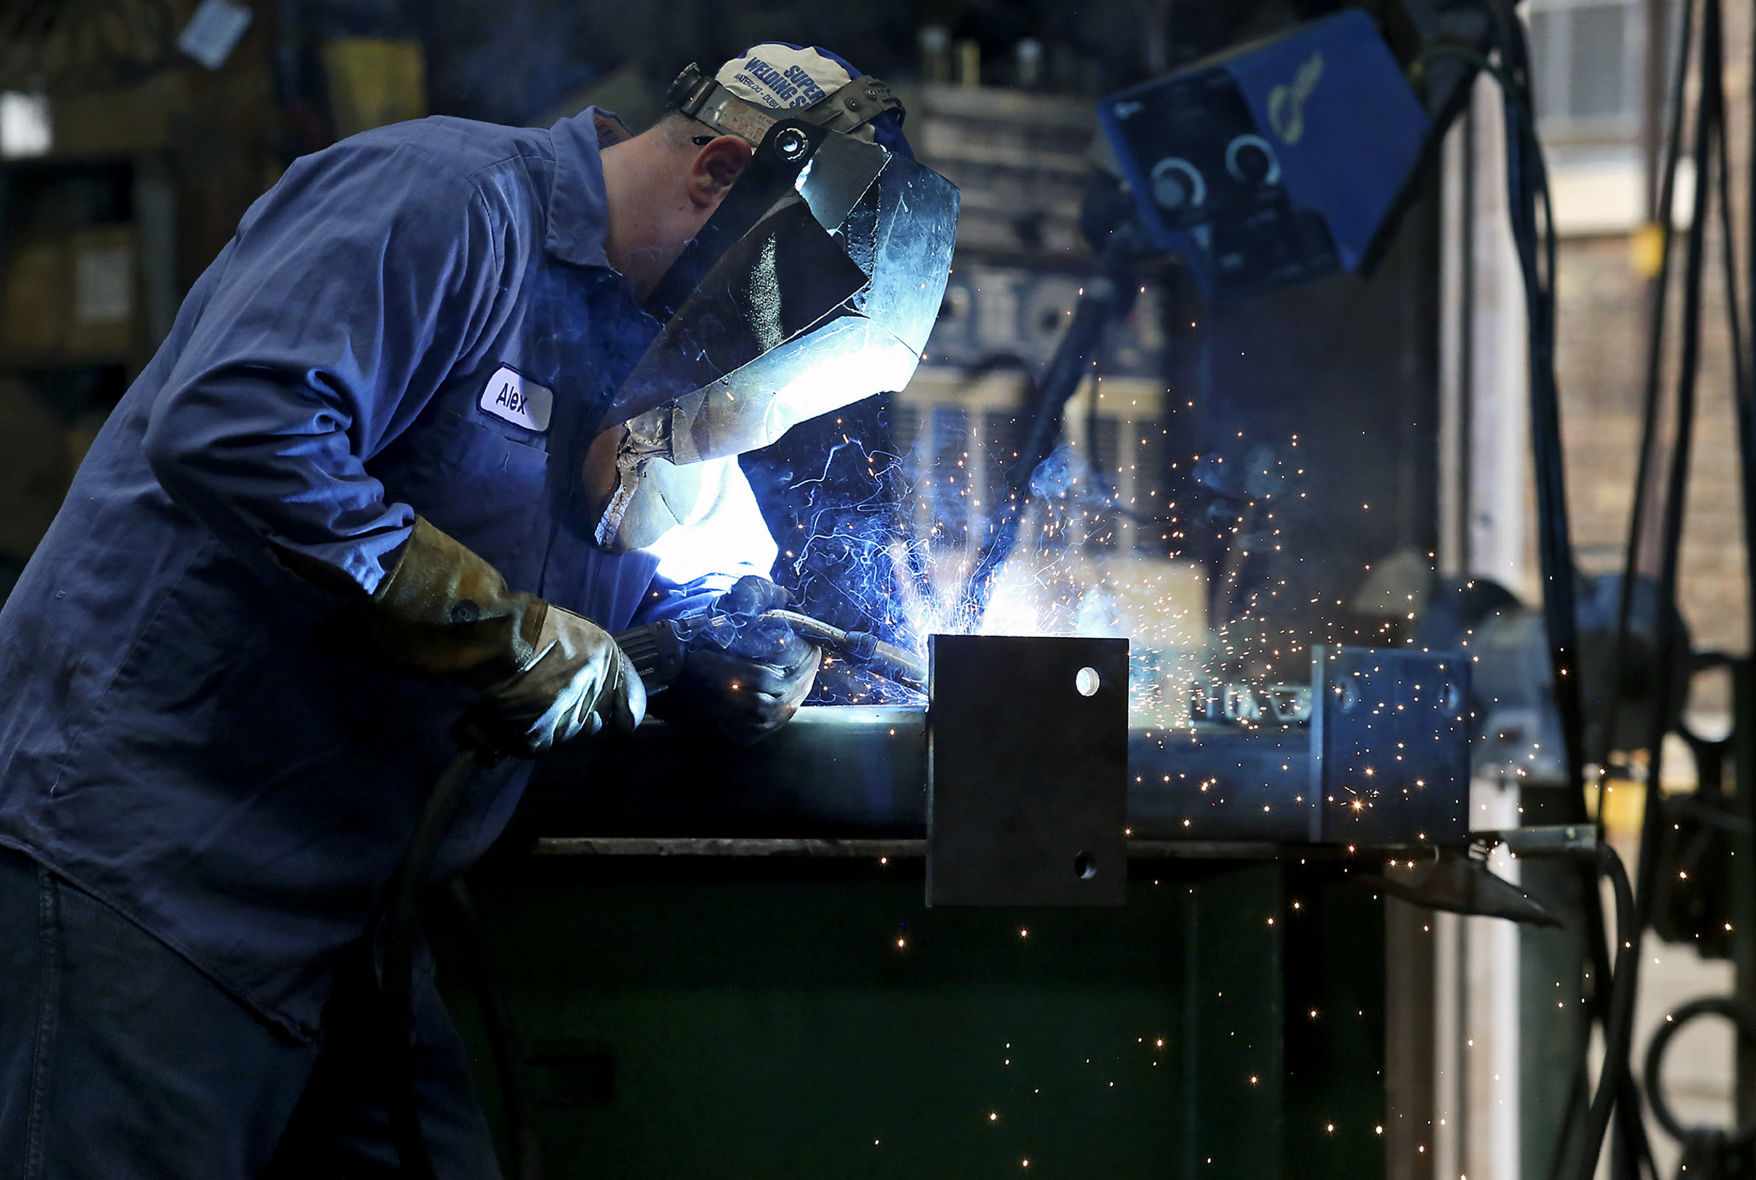 Alex Mihalakis welds steel framing at E.J. Voggenthaler Co. in Dubuque on Wednesday, June 27, 2018.    PHOTO CREDIT: NICKI KOHL